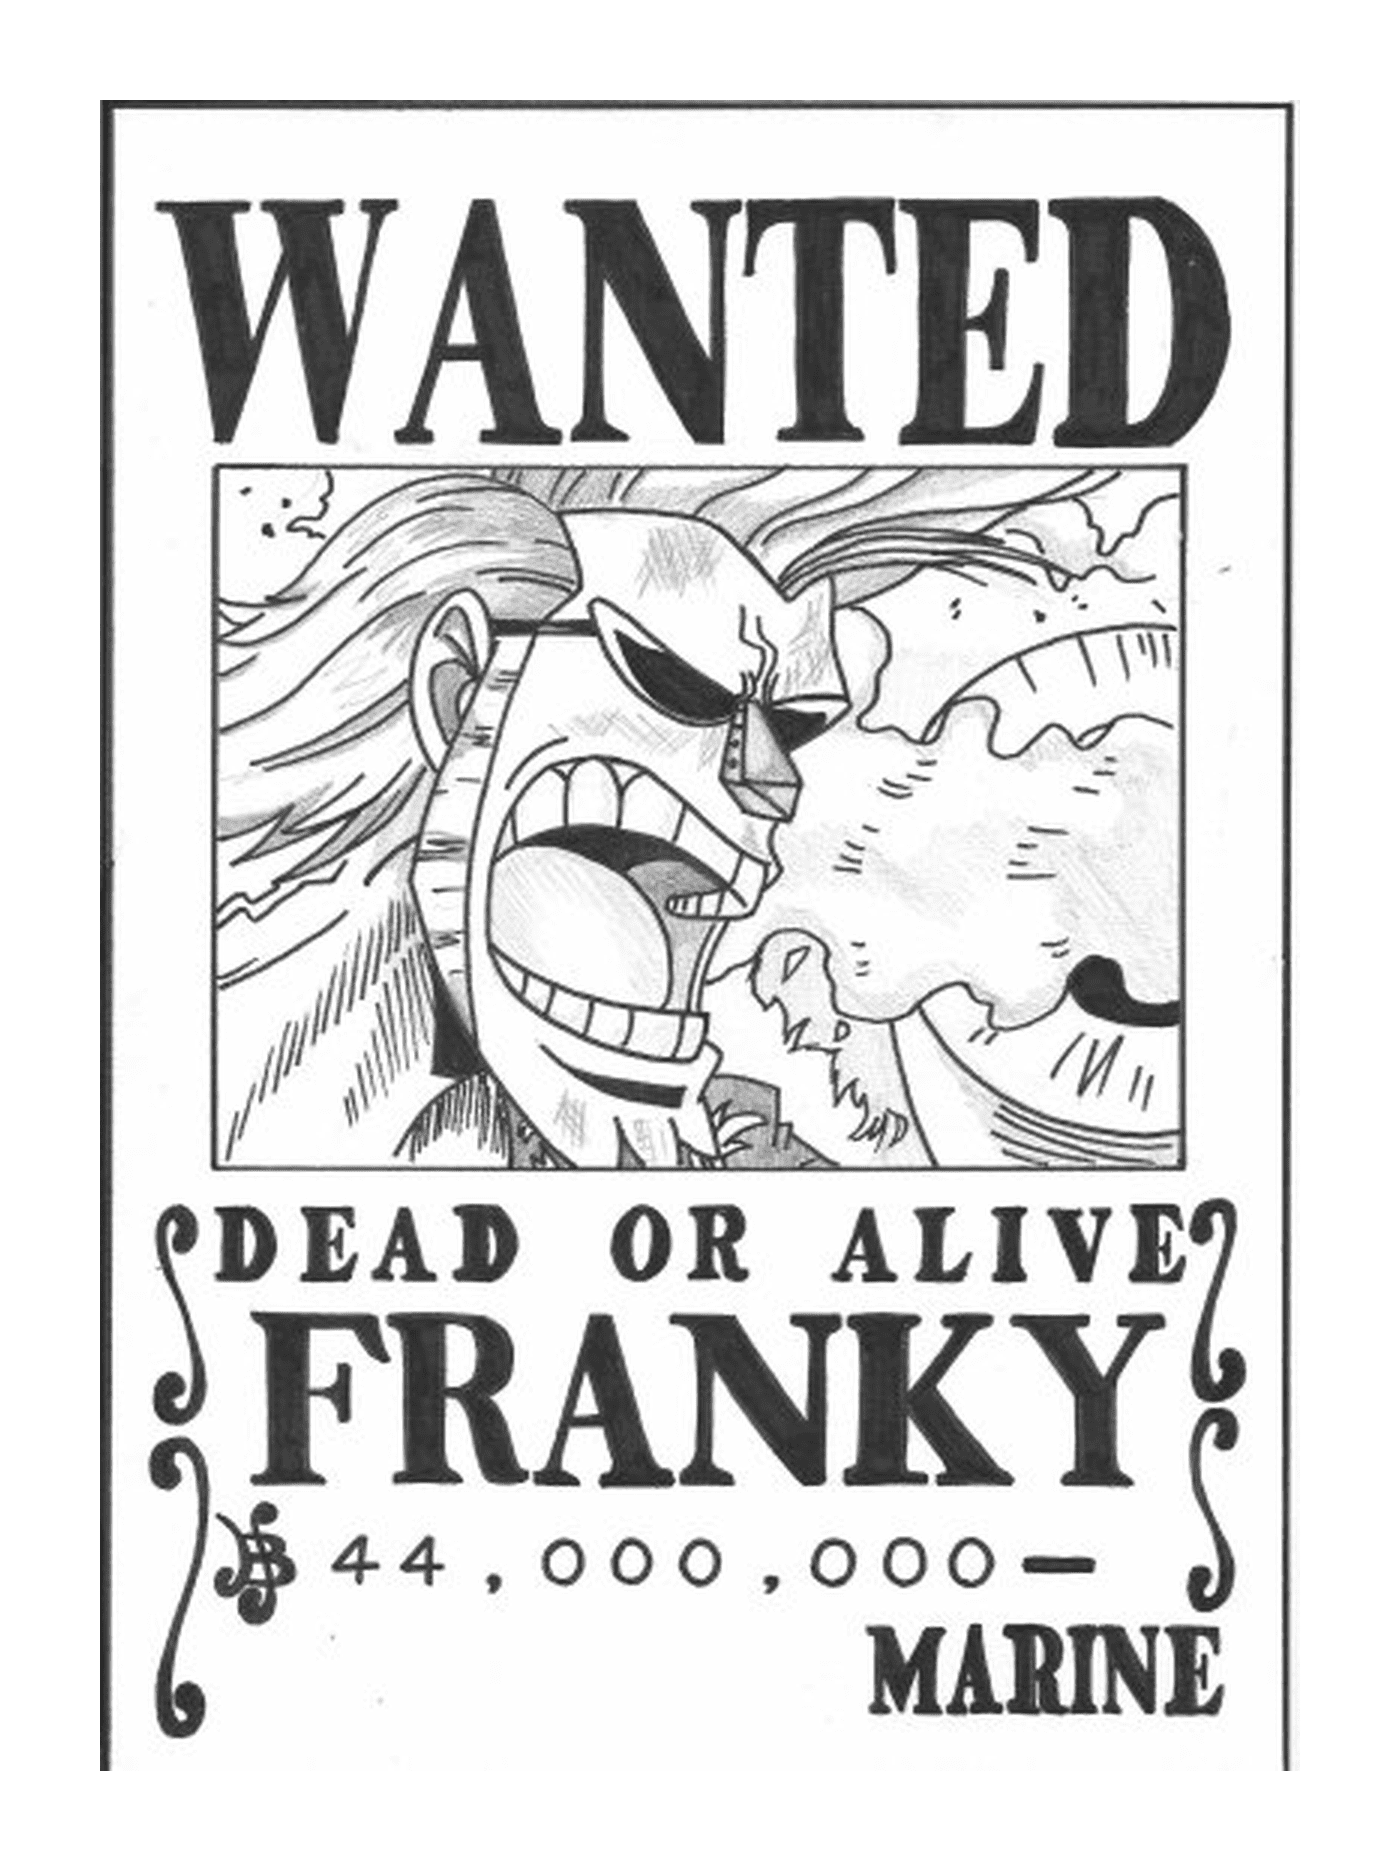   Wanted Franky Marine, mort ou vif 